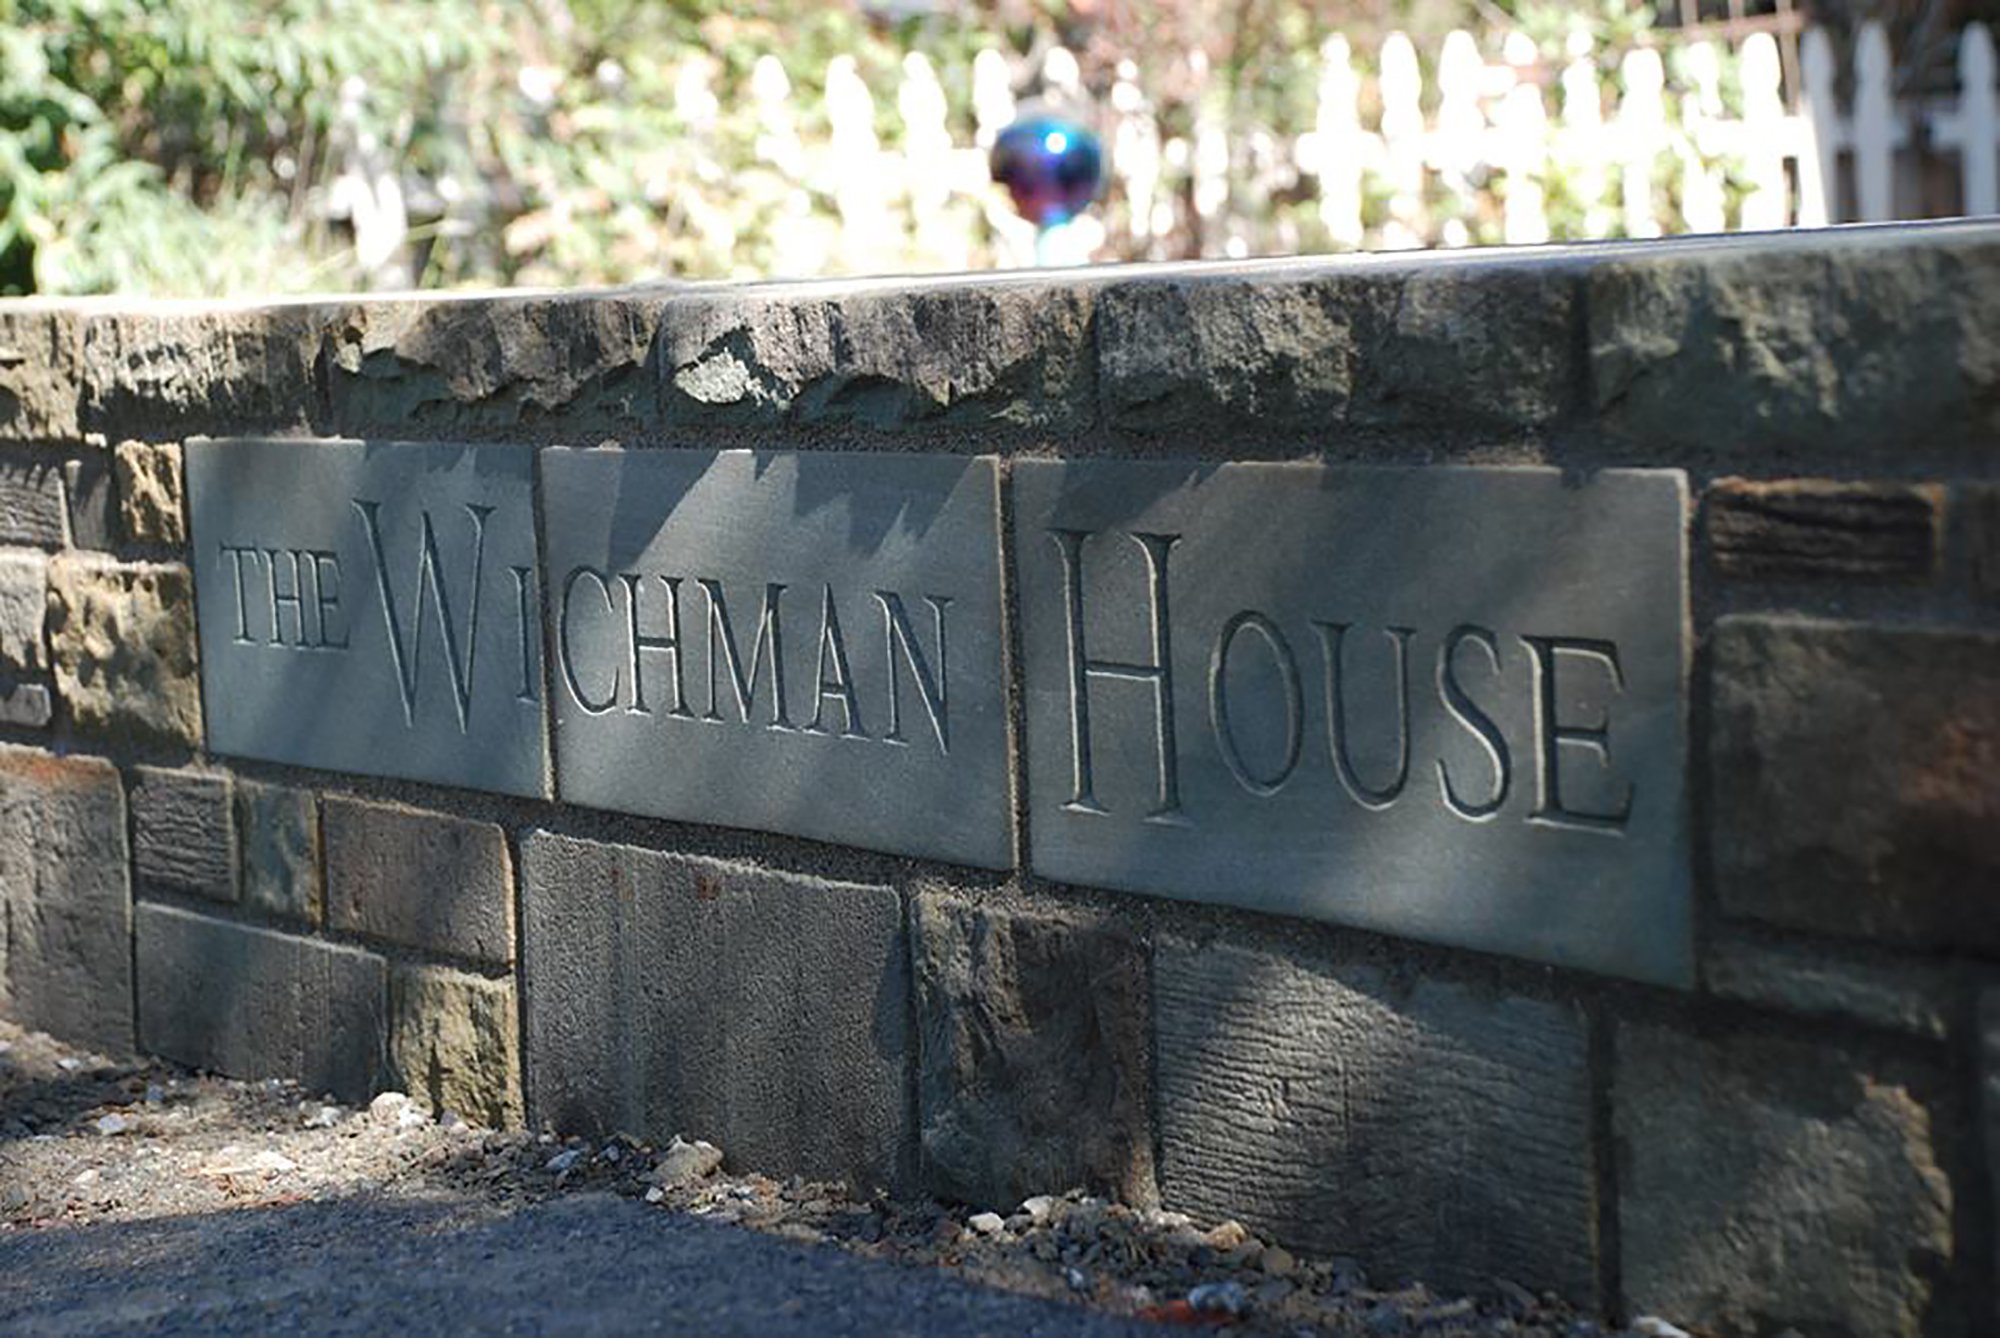 The Wichman House_Ed Salerno.jpg